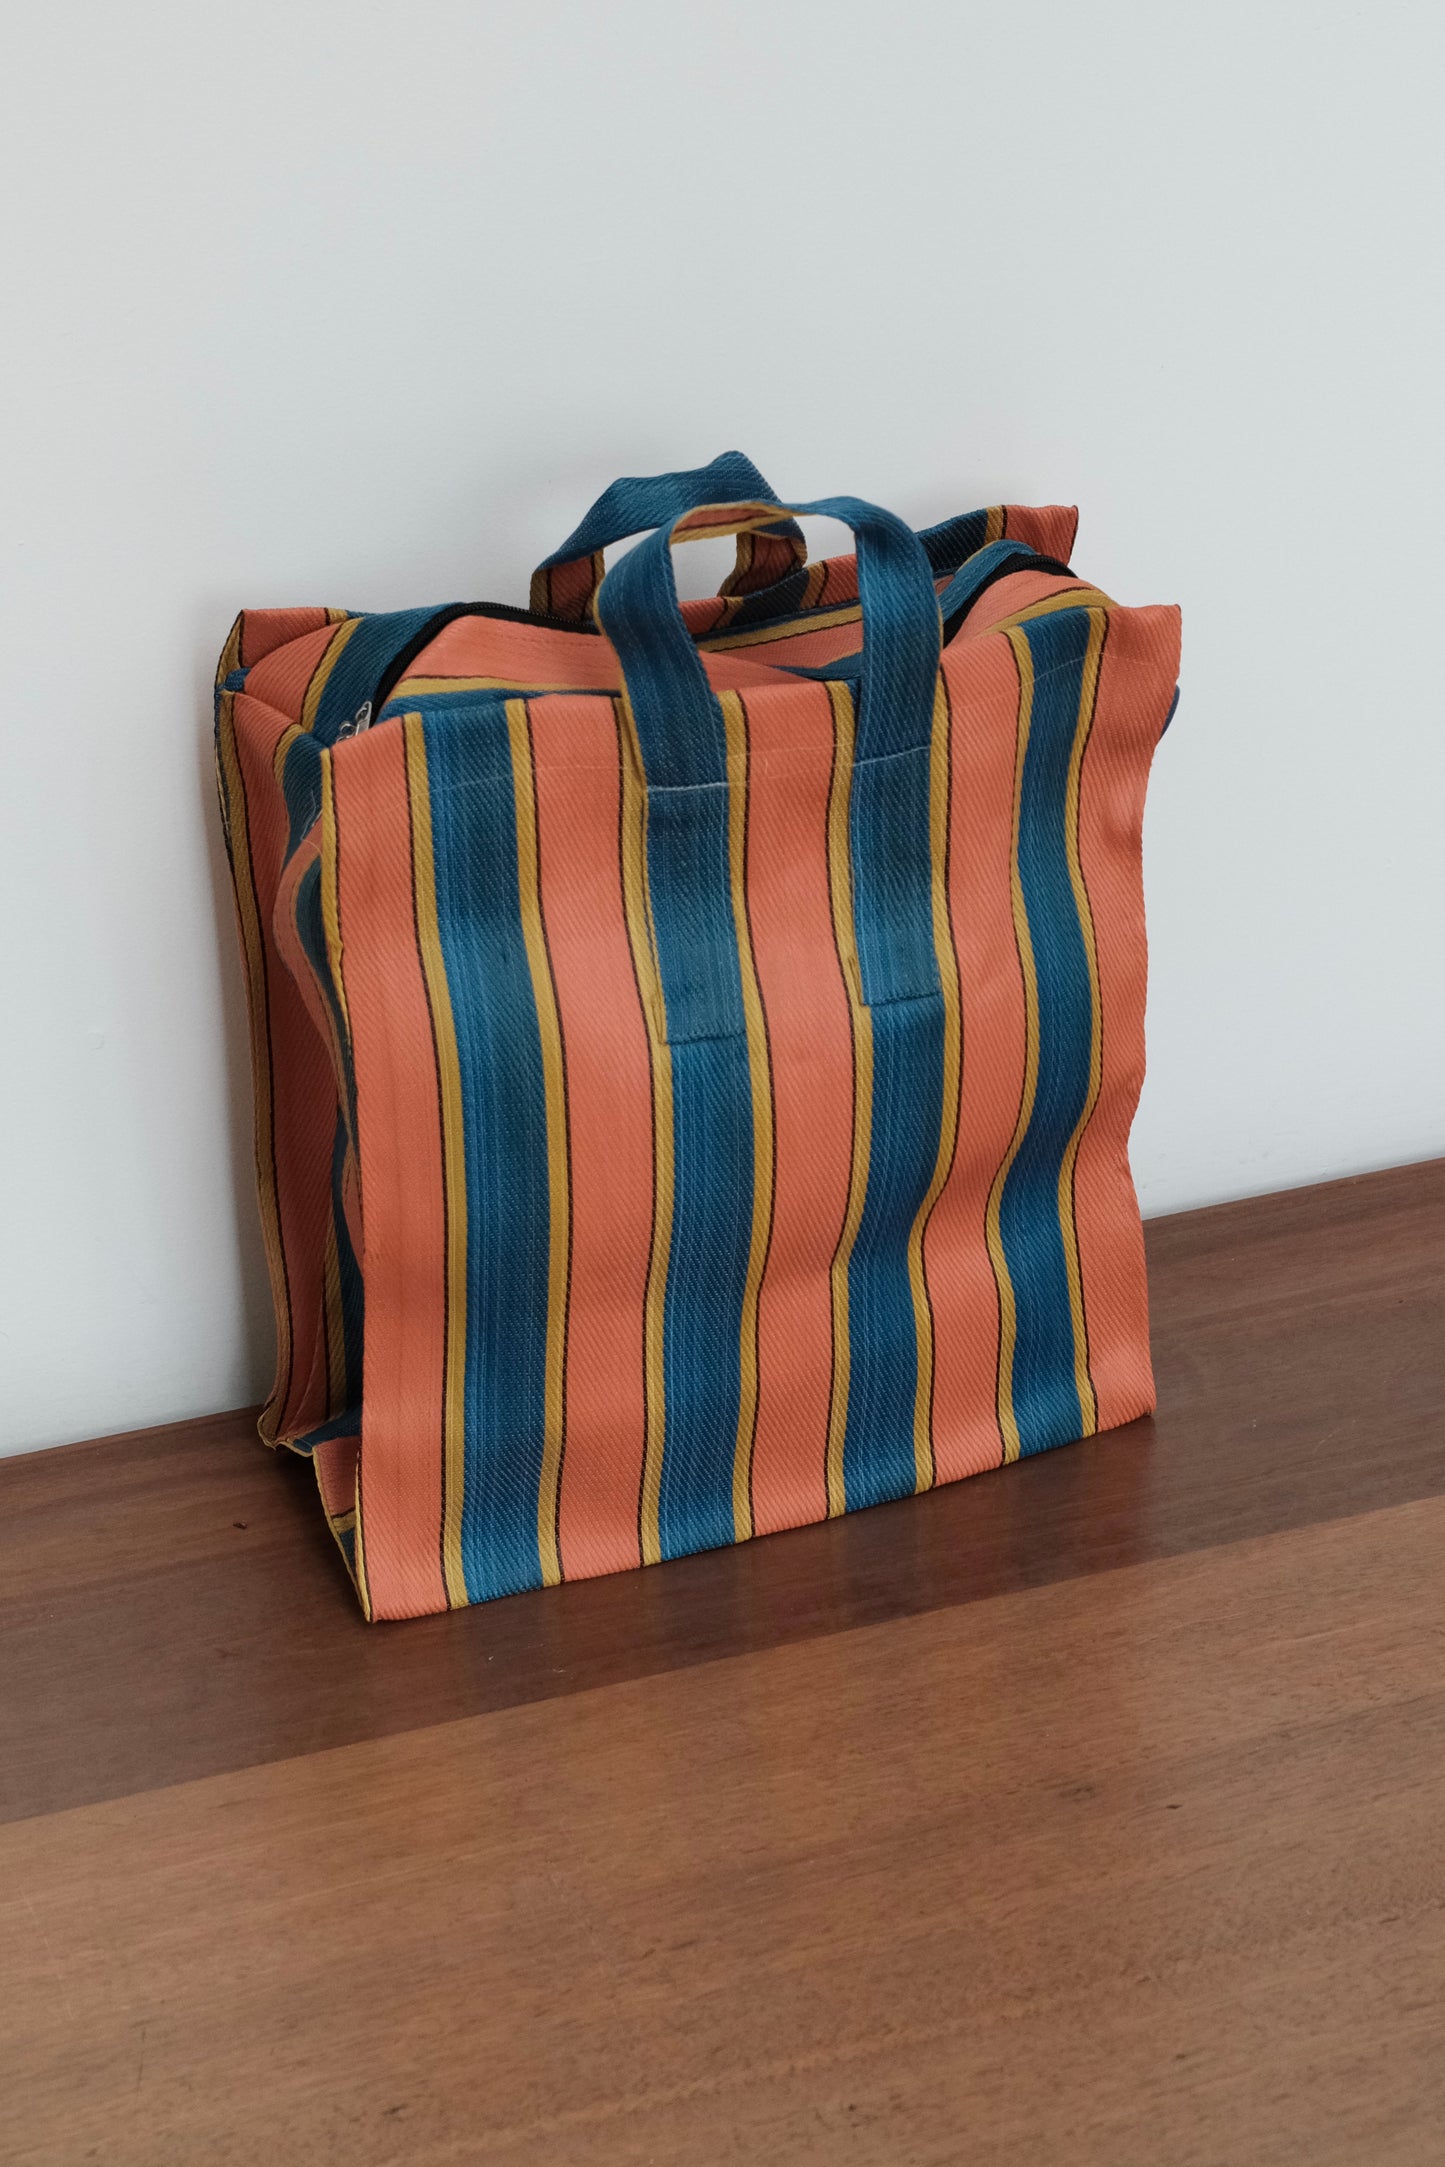 Stripe Bag - Small Size